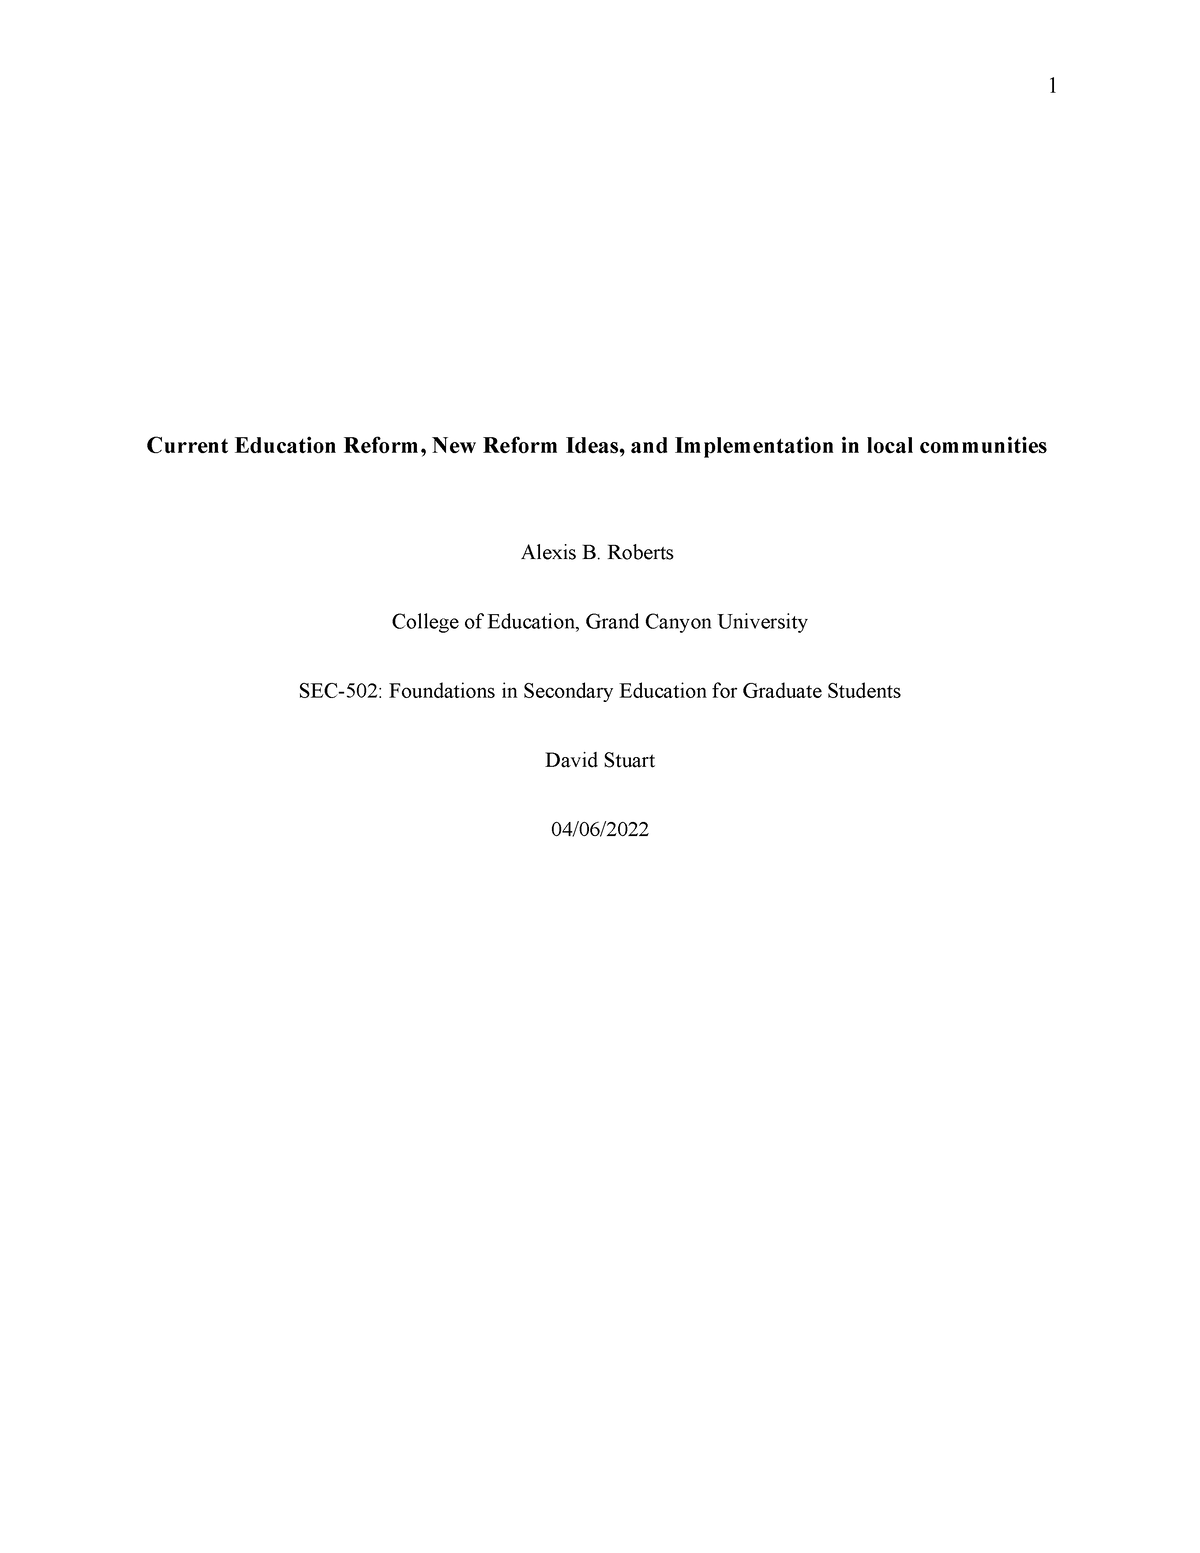 dissertation education reform